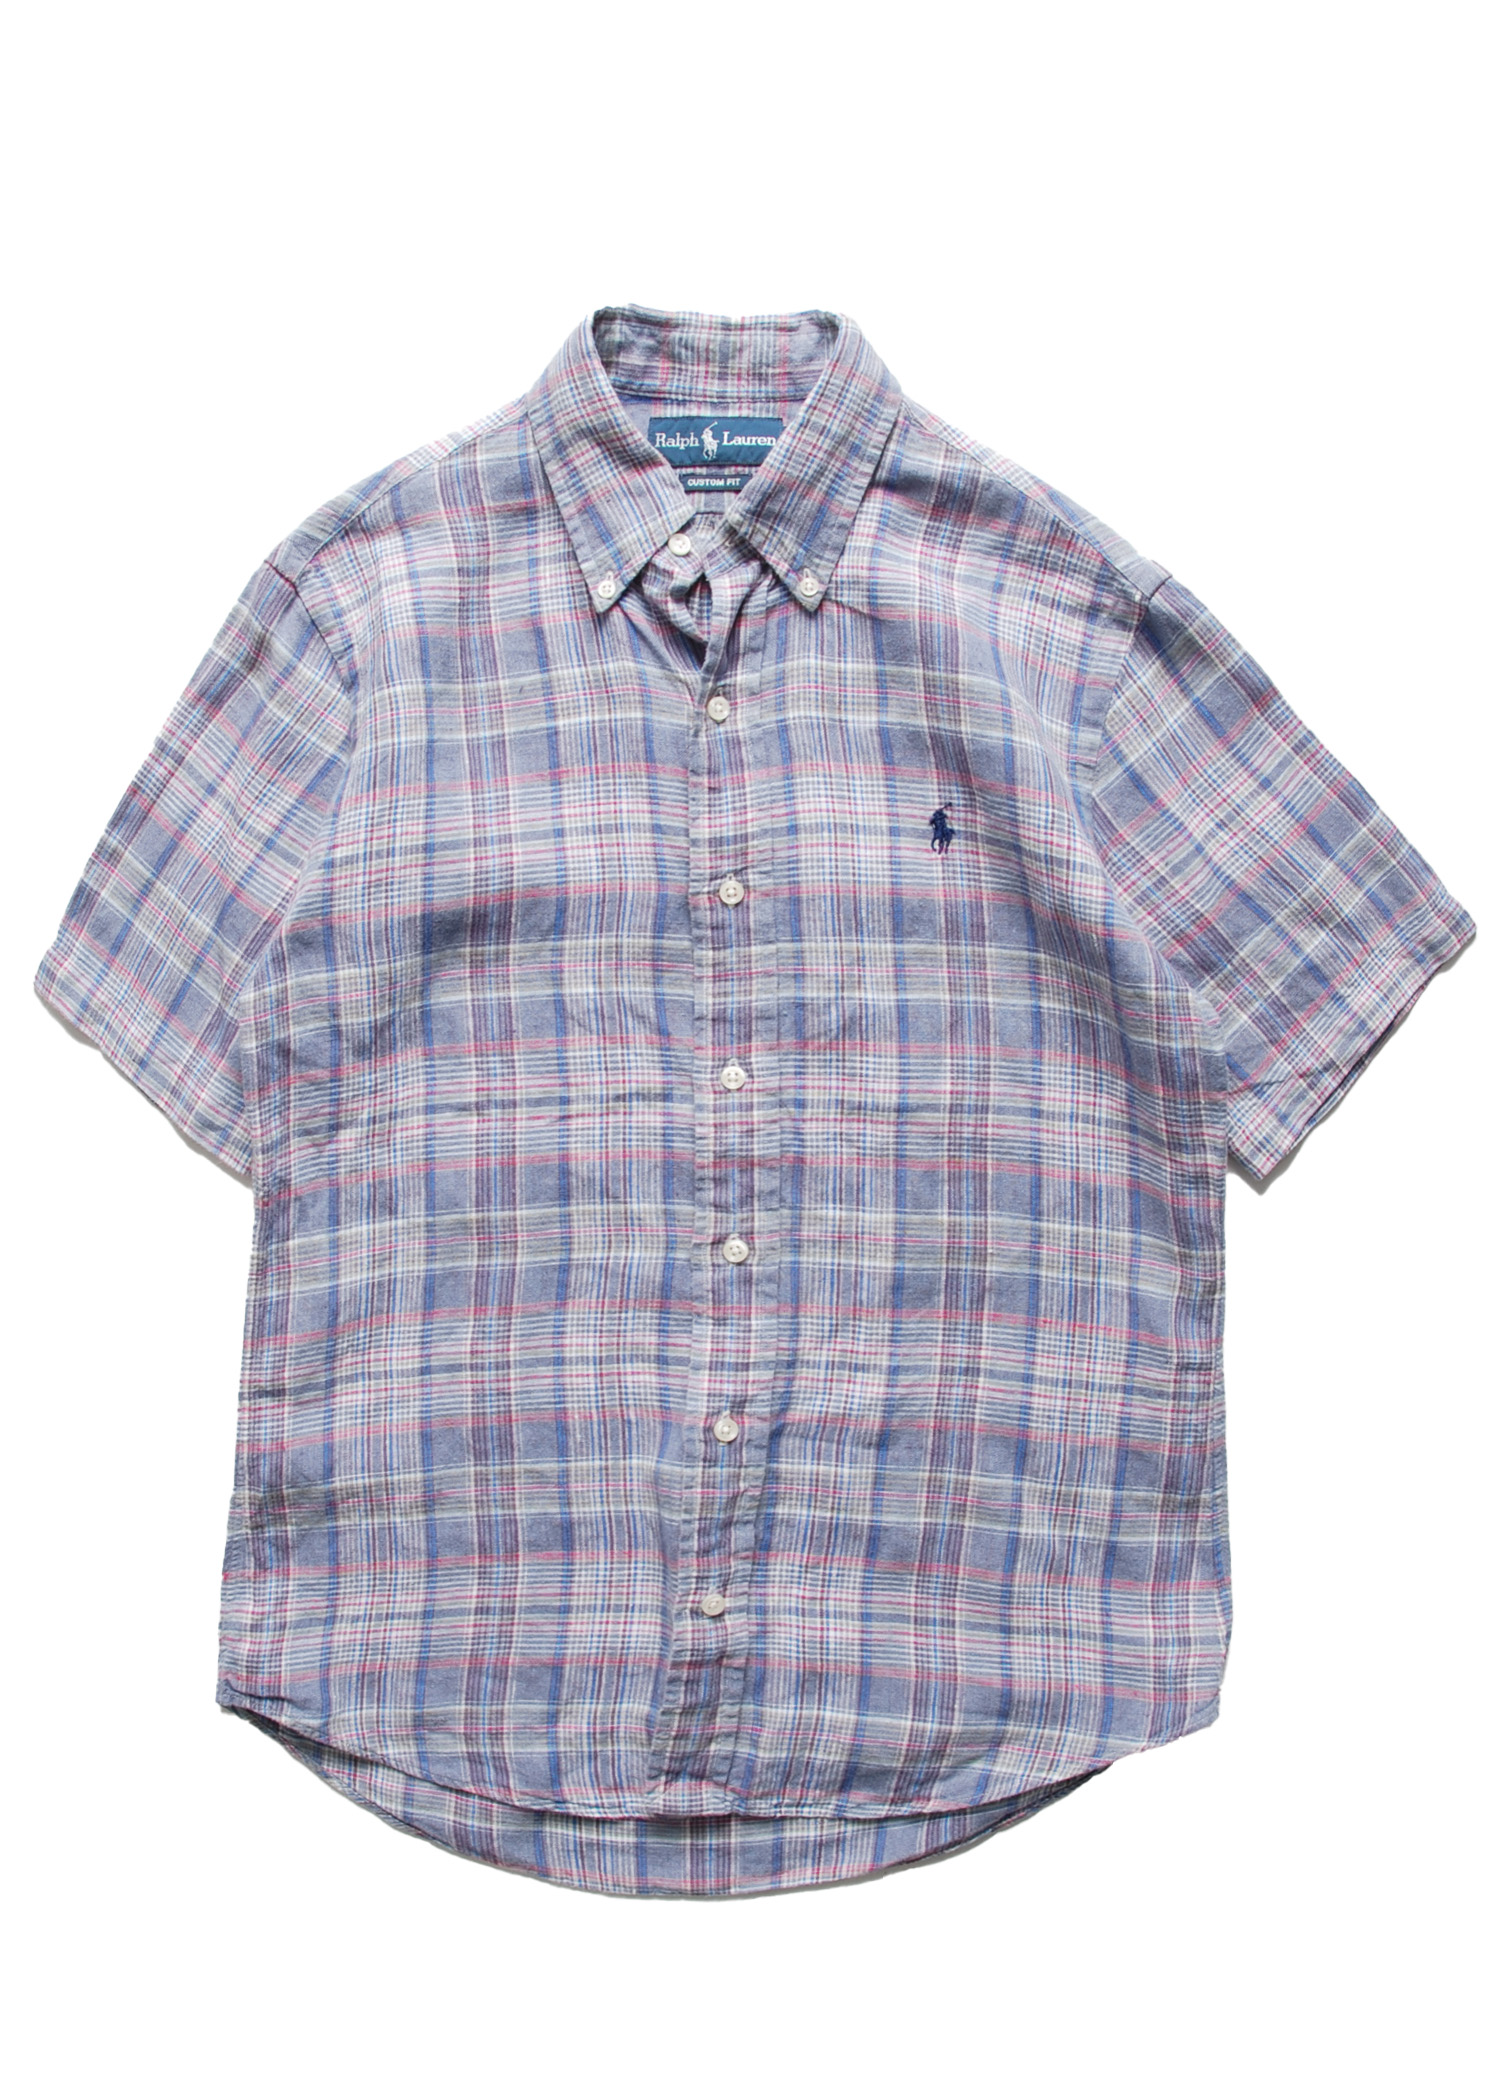 Polo Ralph Lauren check shirts